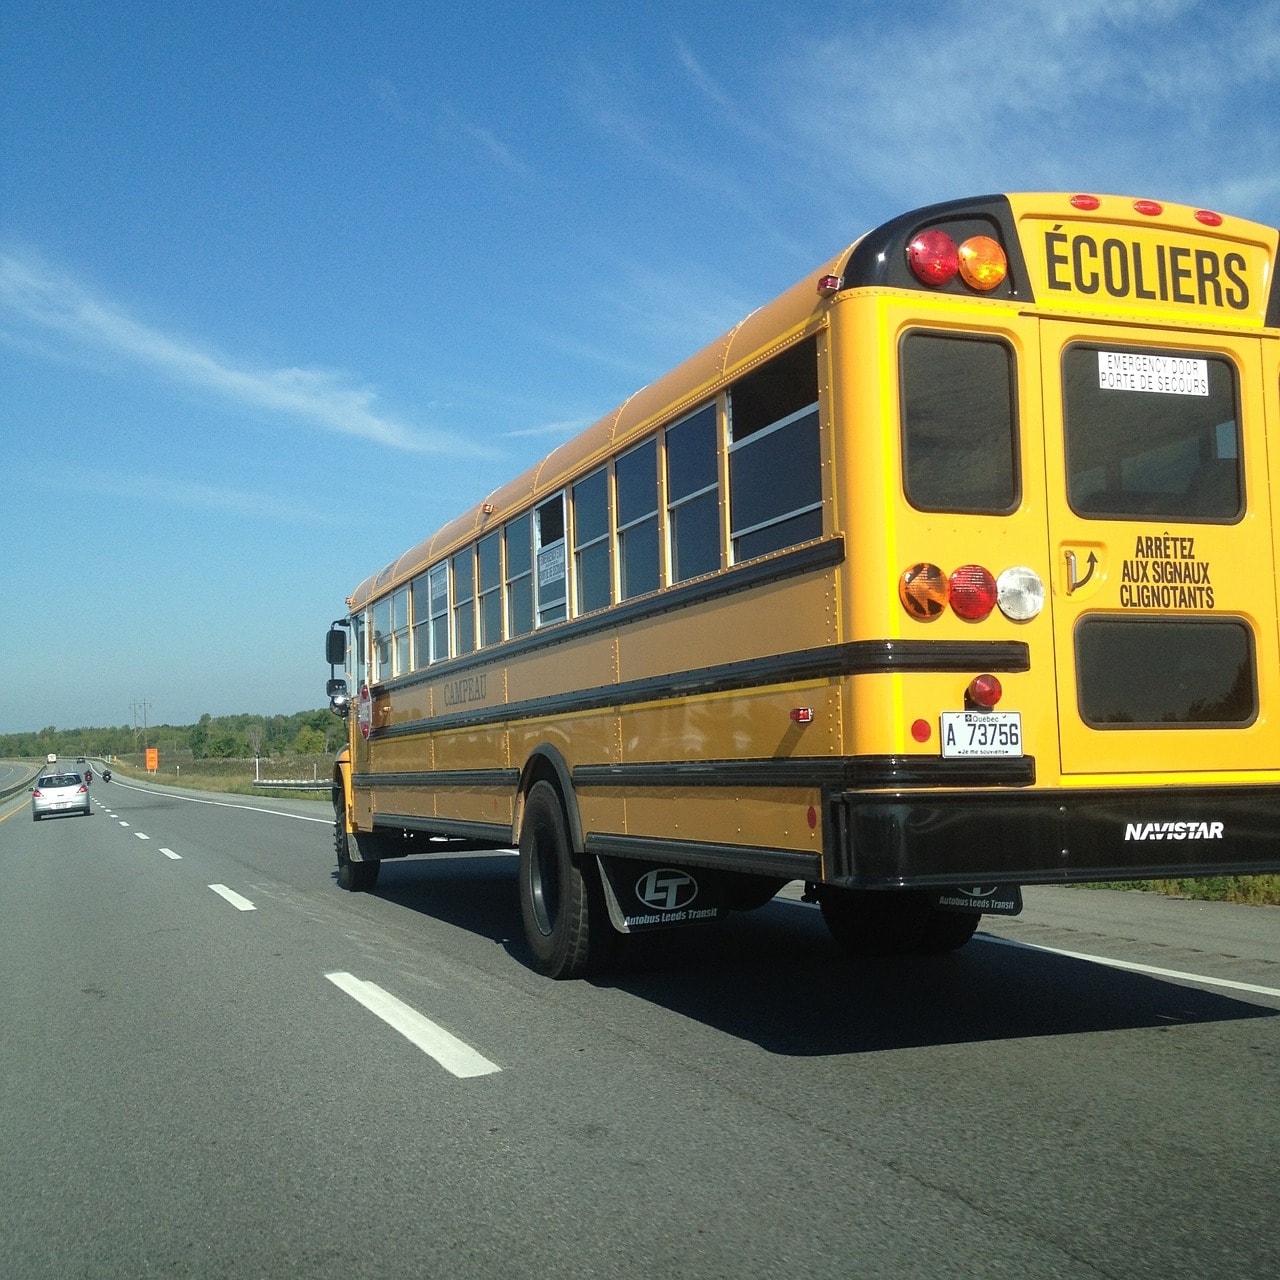 School bus on the road. Motorist, be careful.